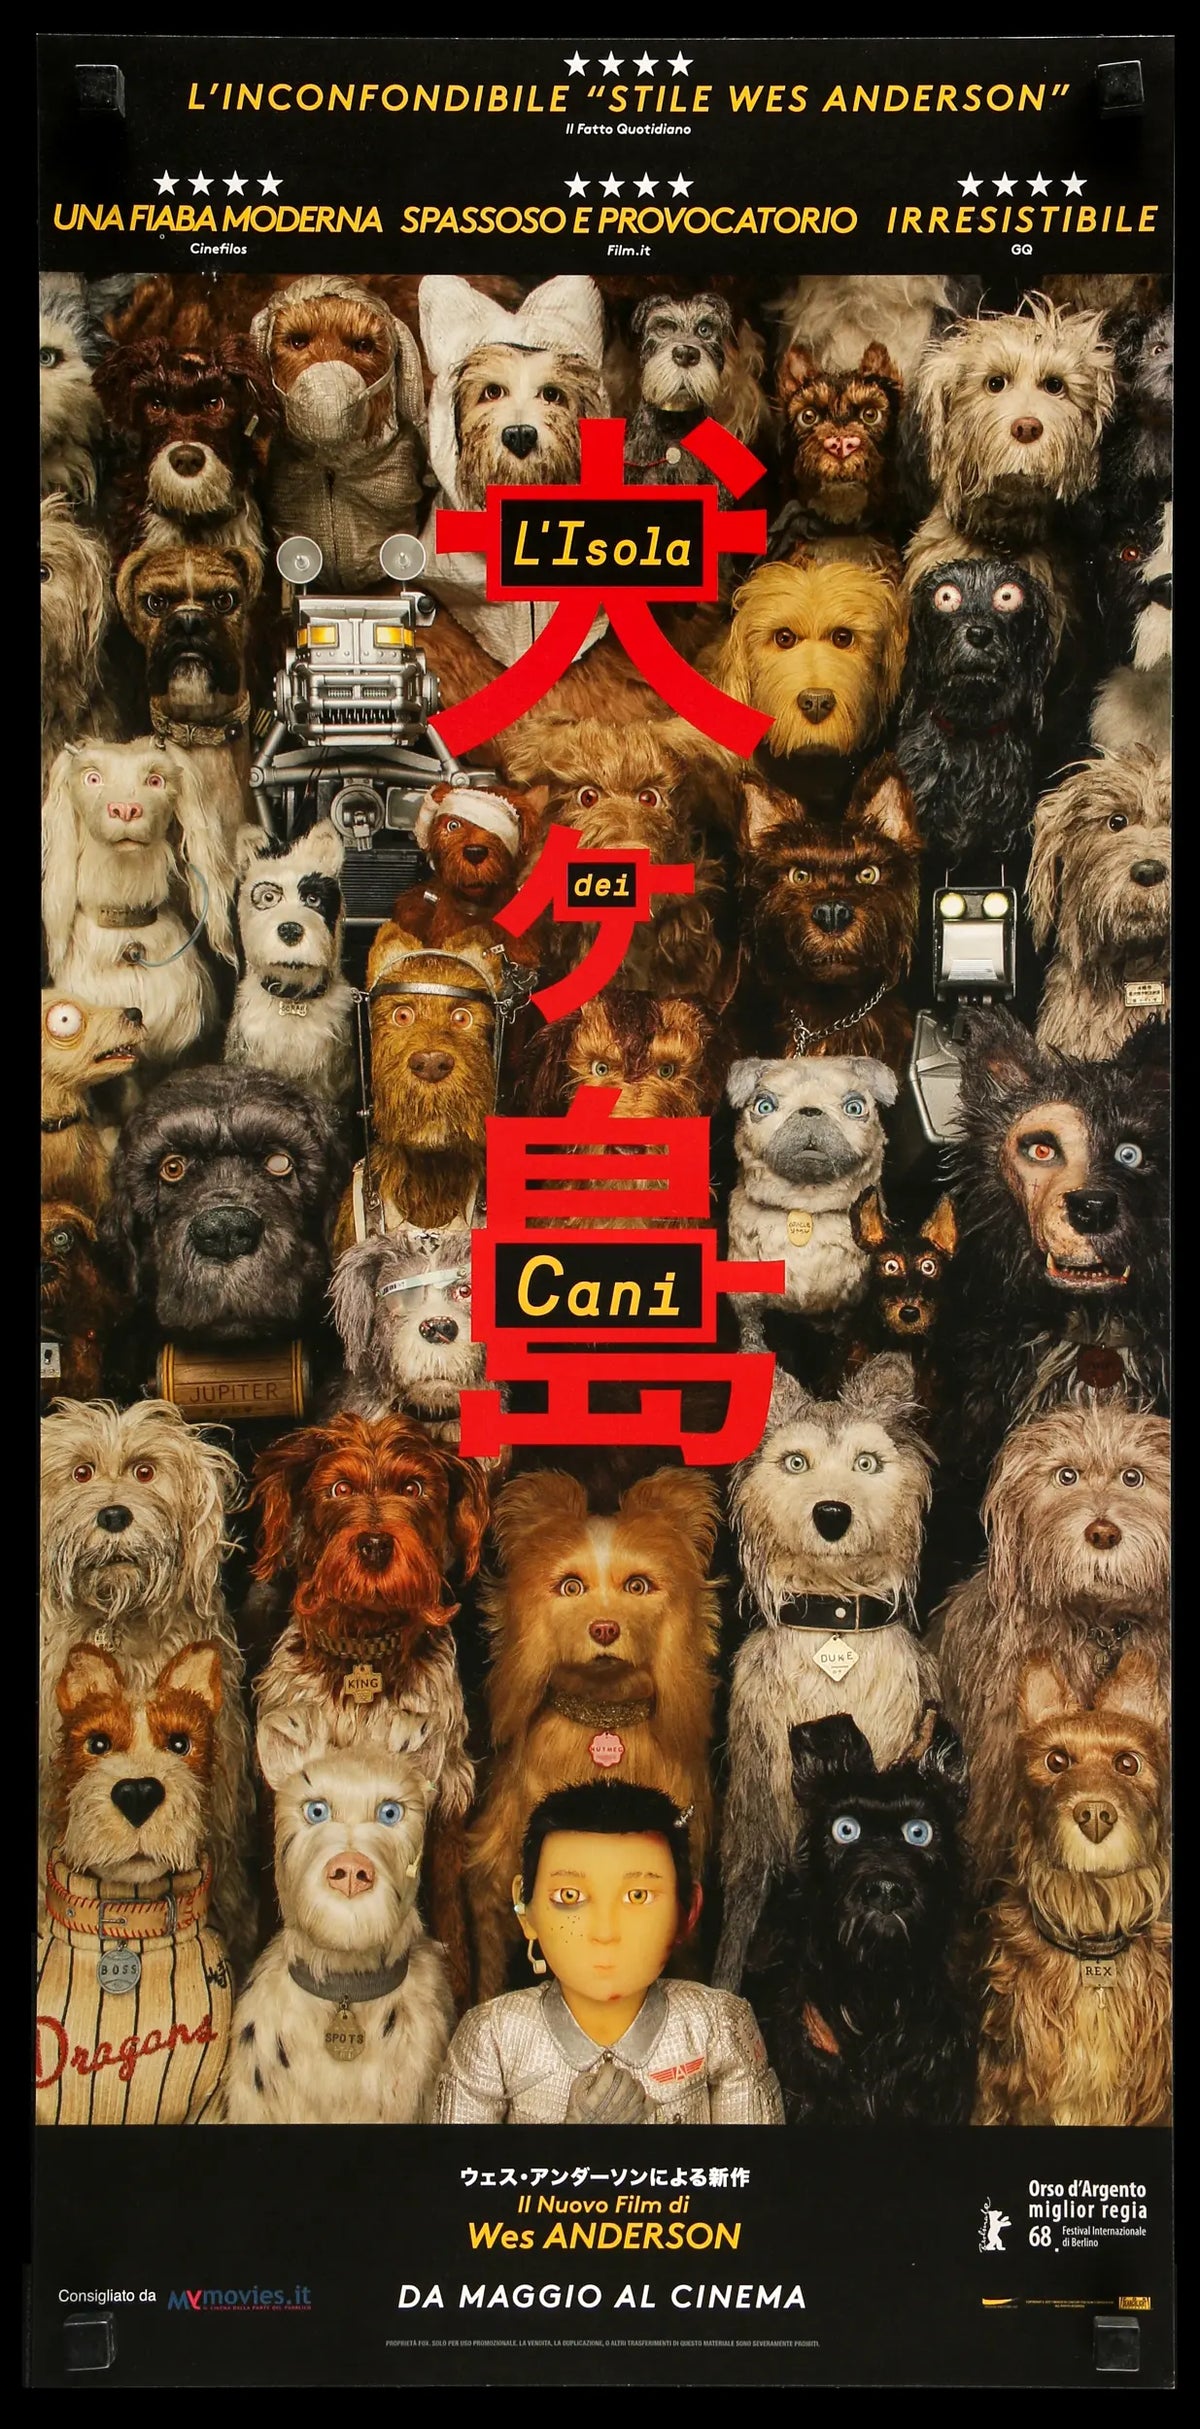 Isle of Dogs (2018) original movie poster for sale at Original Film Art